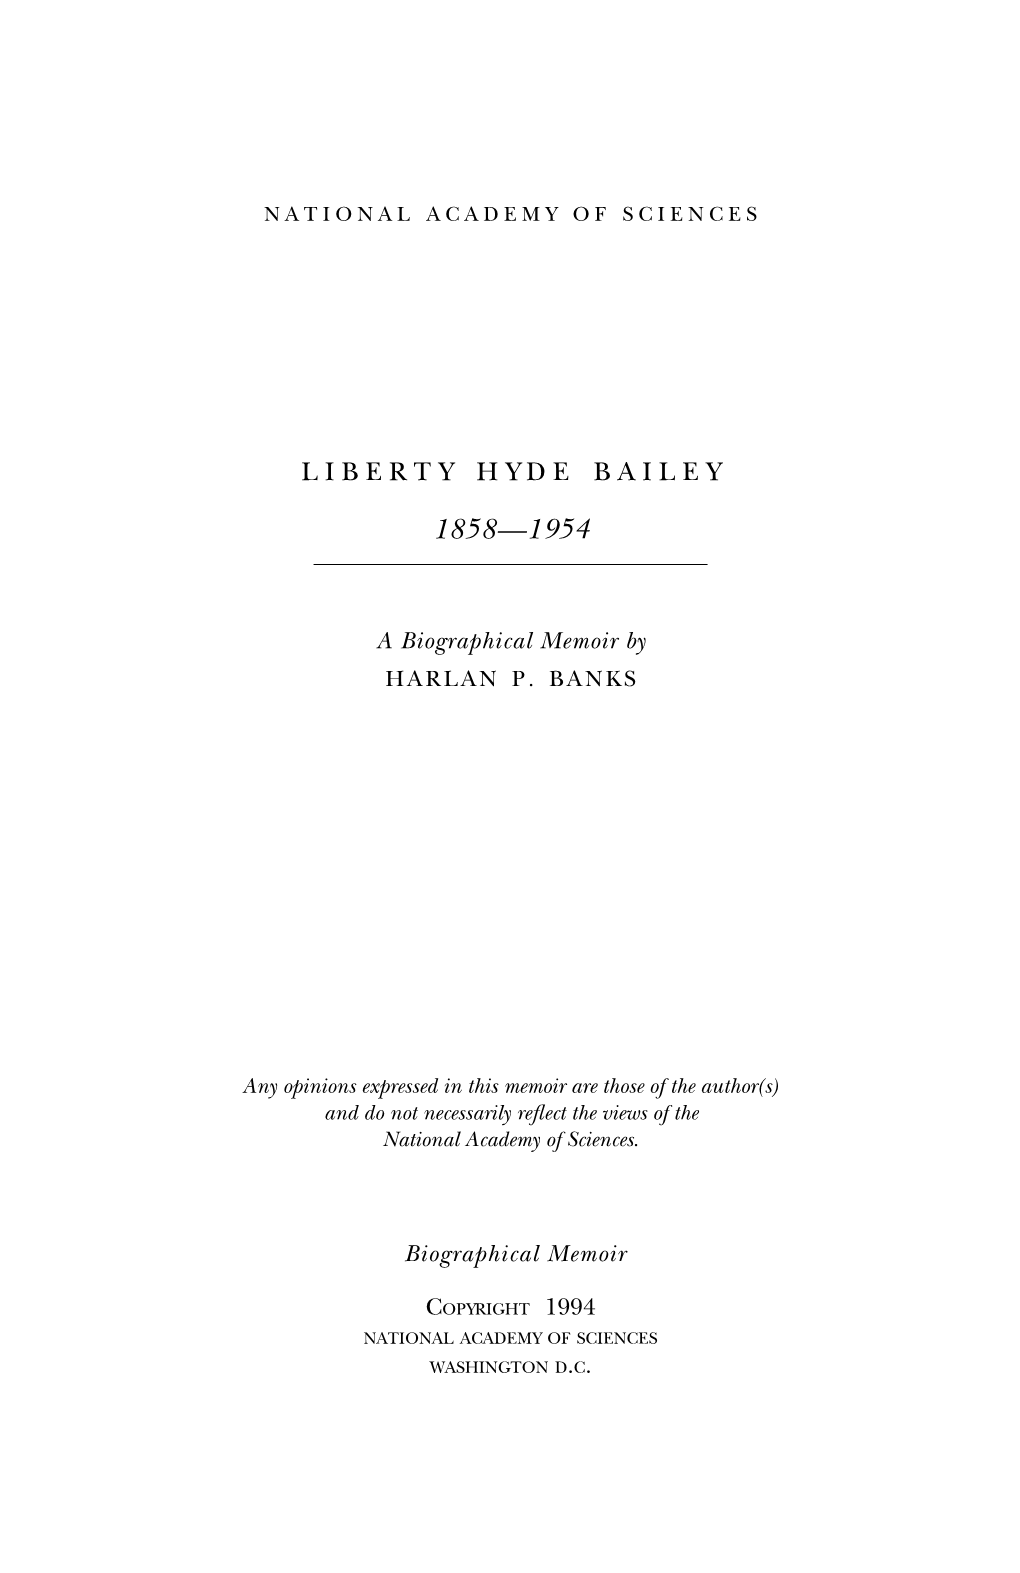 LIBERTY HYDE BAILEY March 15, 1858-December 25, 1954